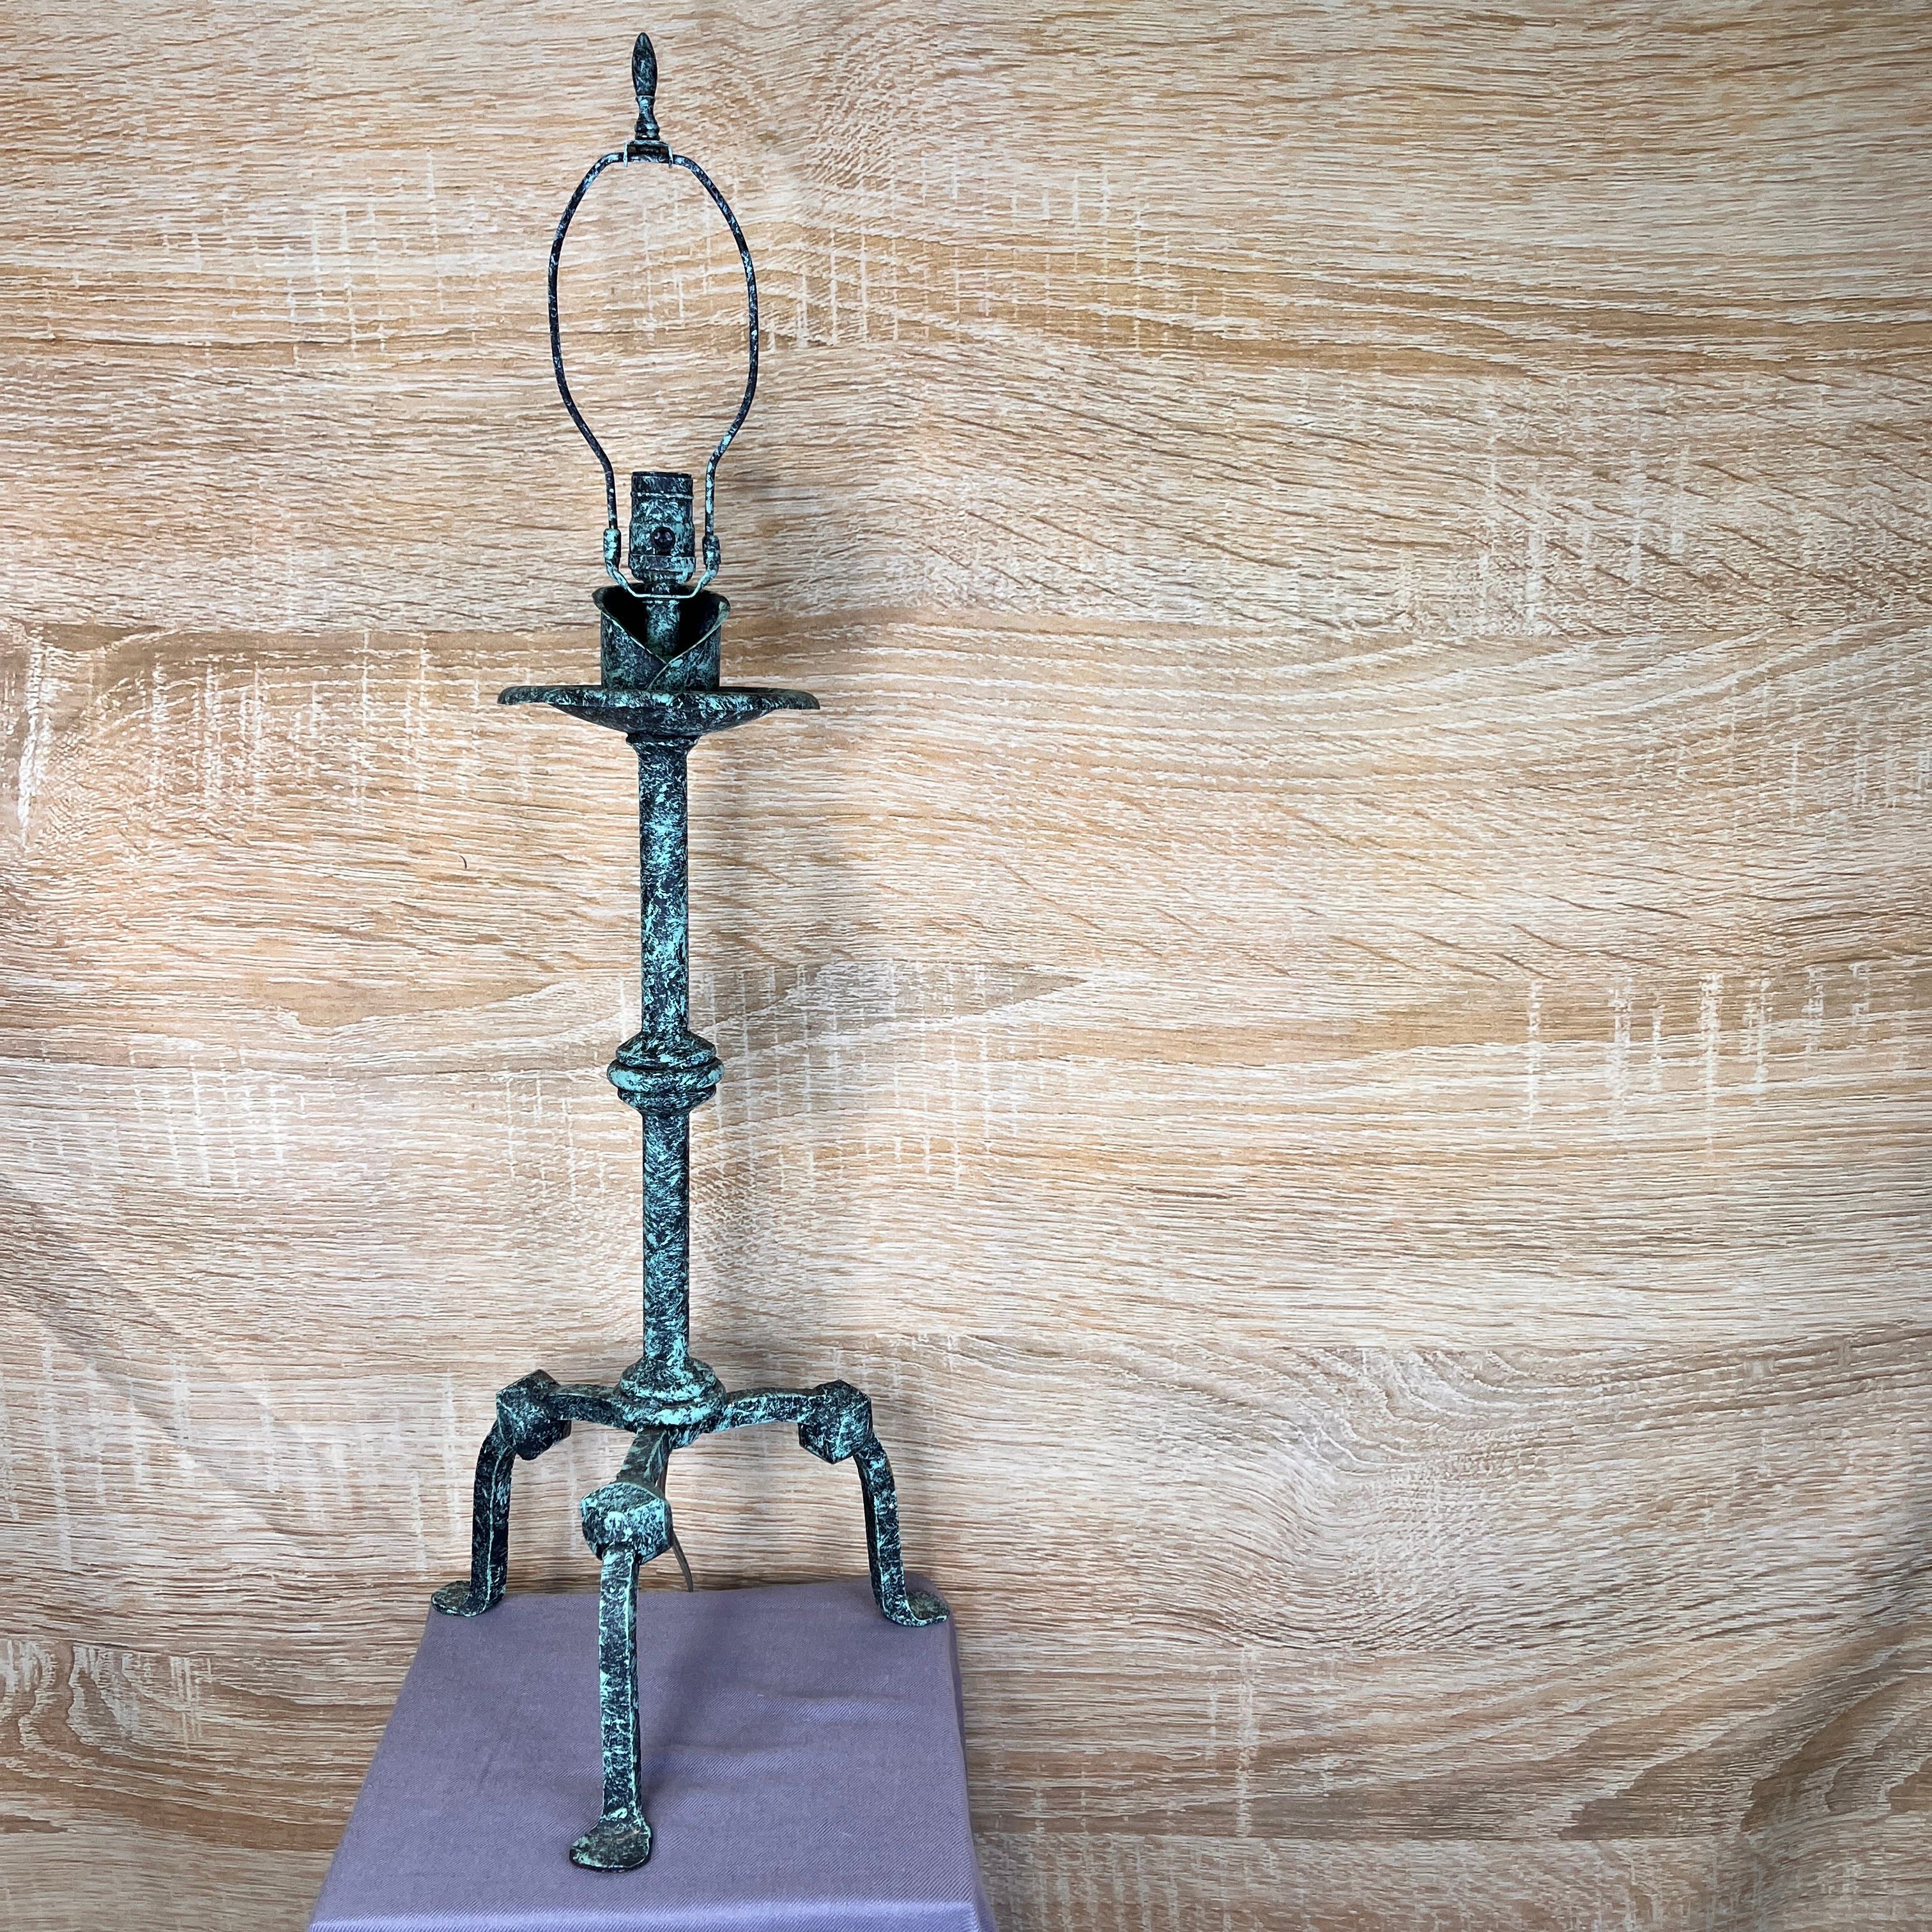 Gothic Spanish Revival Wrought Iron Gavanized Table Lamp